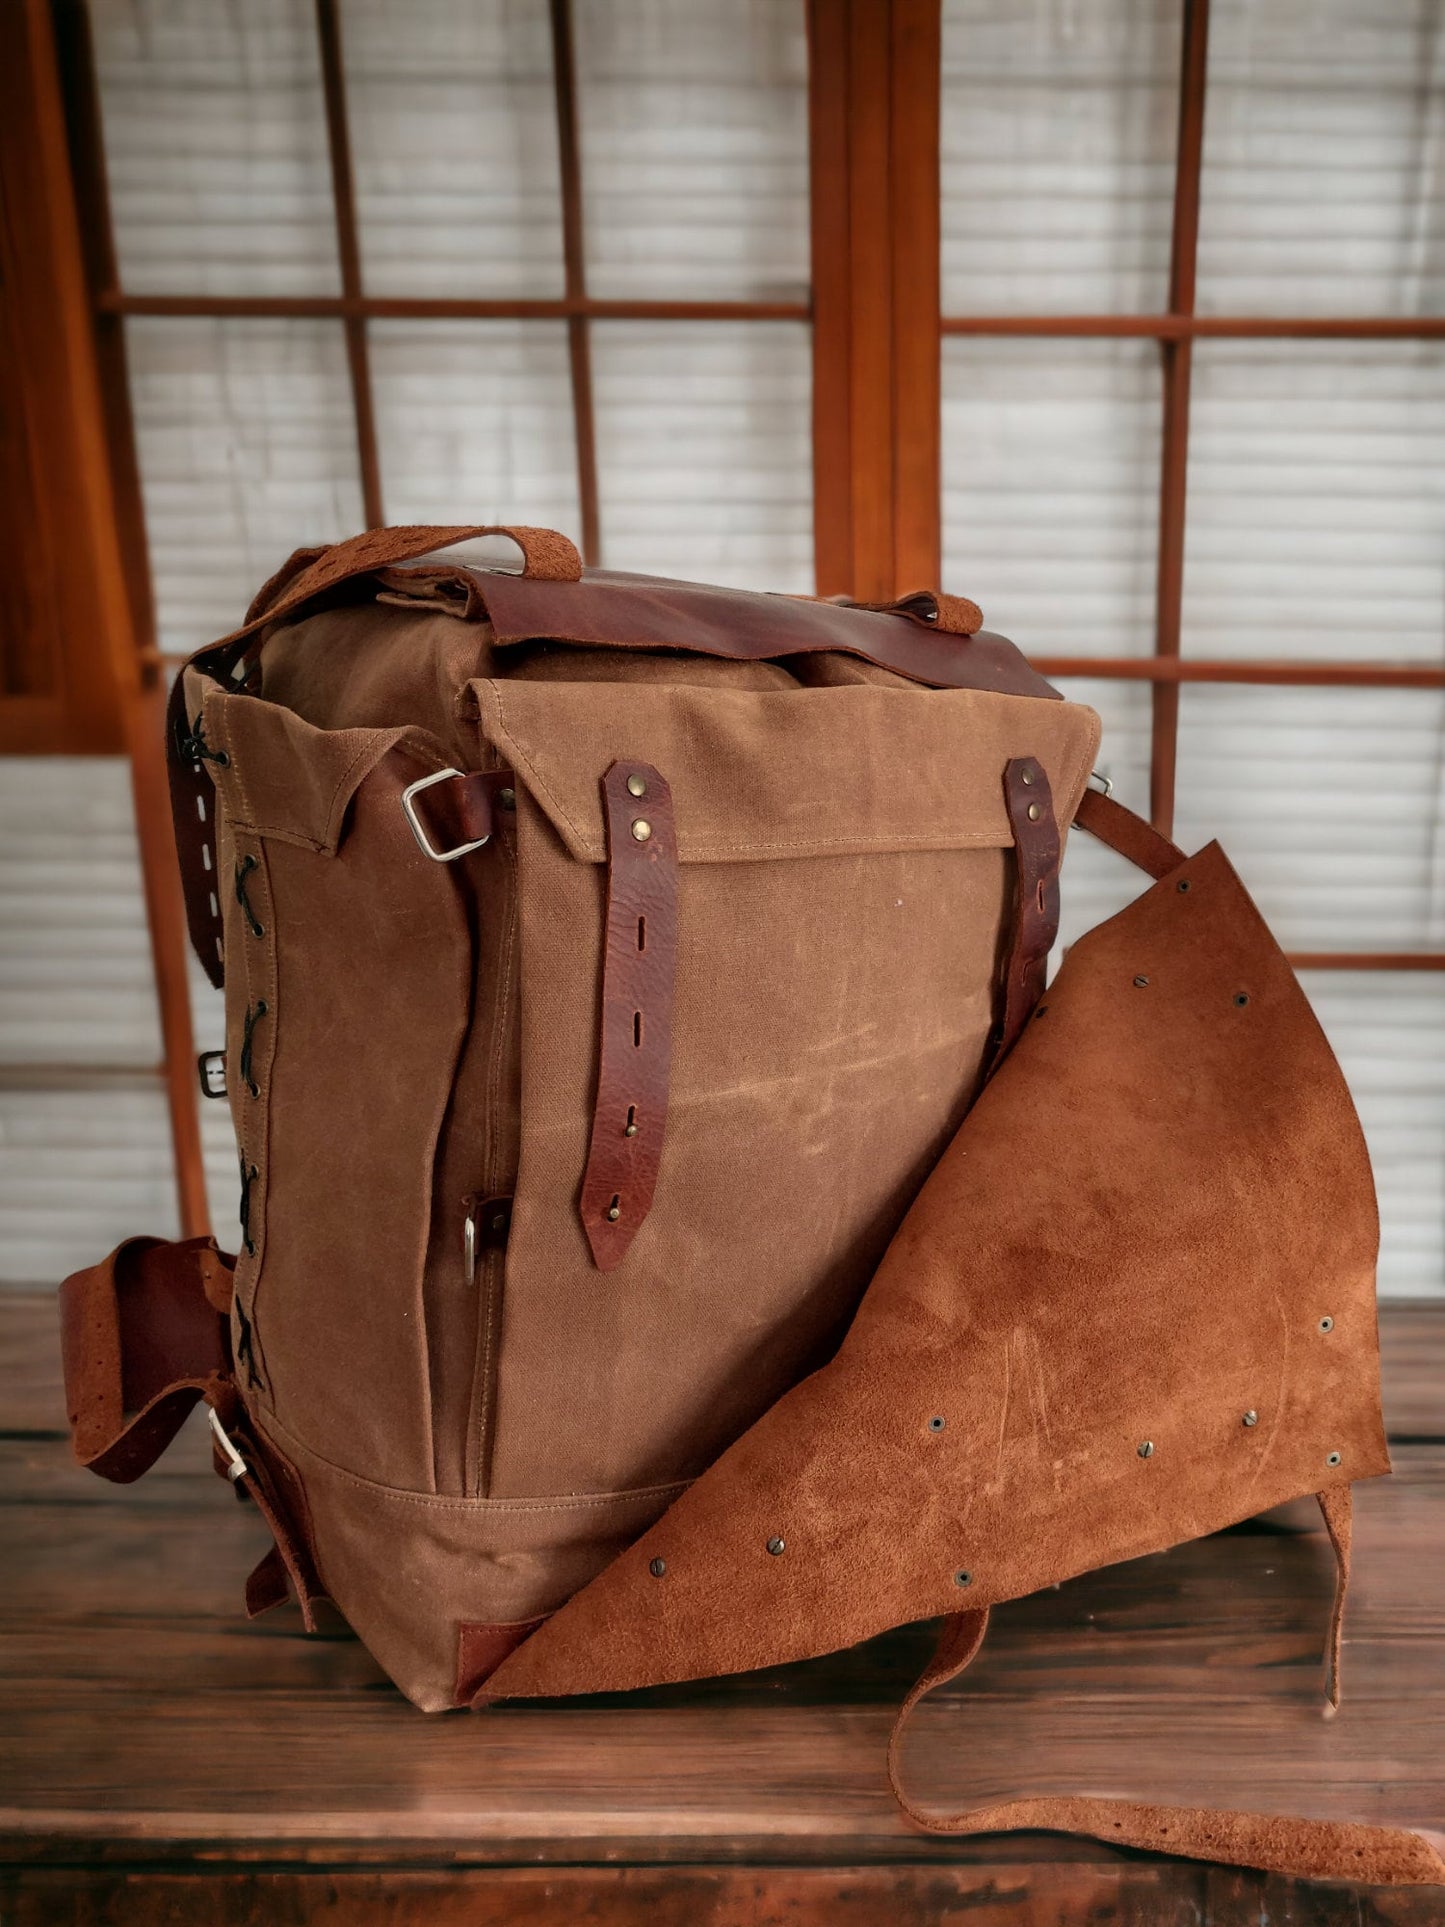 80 Liter | Camping Backpack | Bushcraft Backpack |Leather Canvas Backpack | Brown - Beige | Travel Backpack  99percenthandmade 60 Beige 